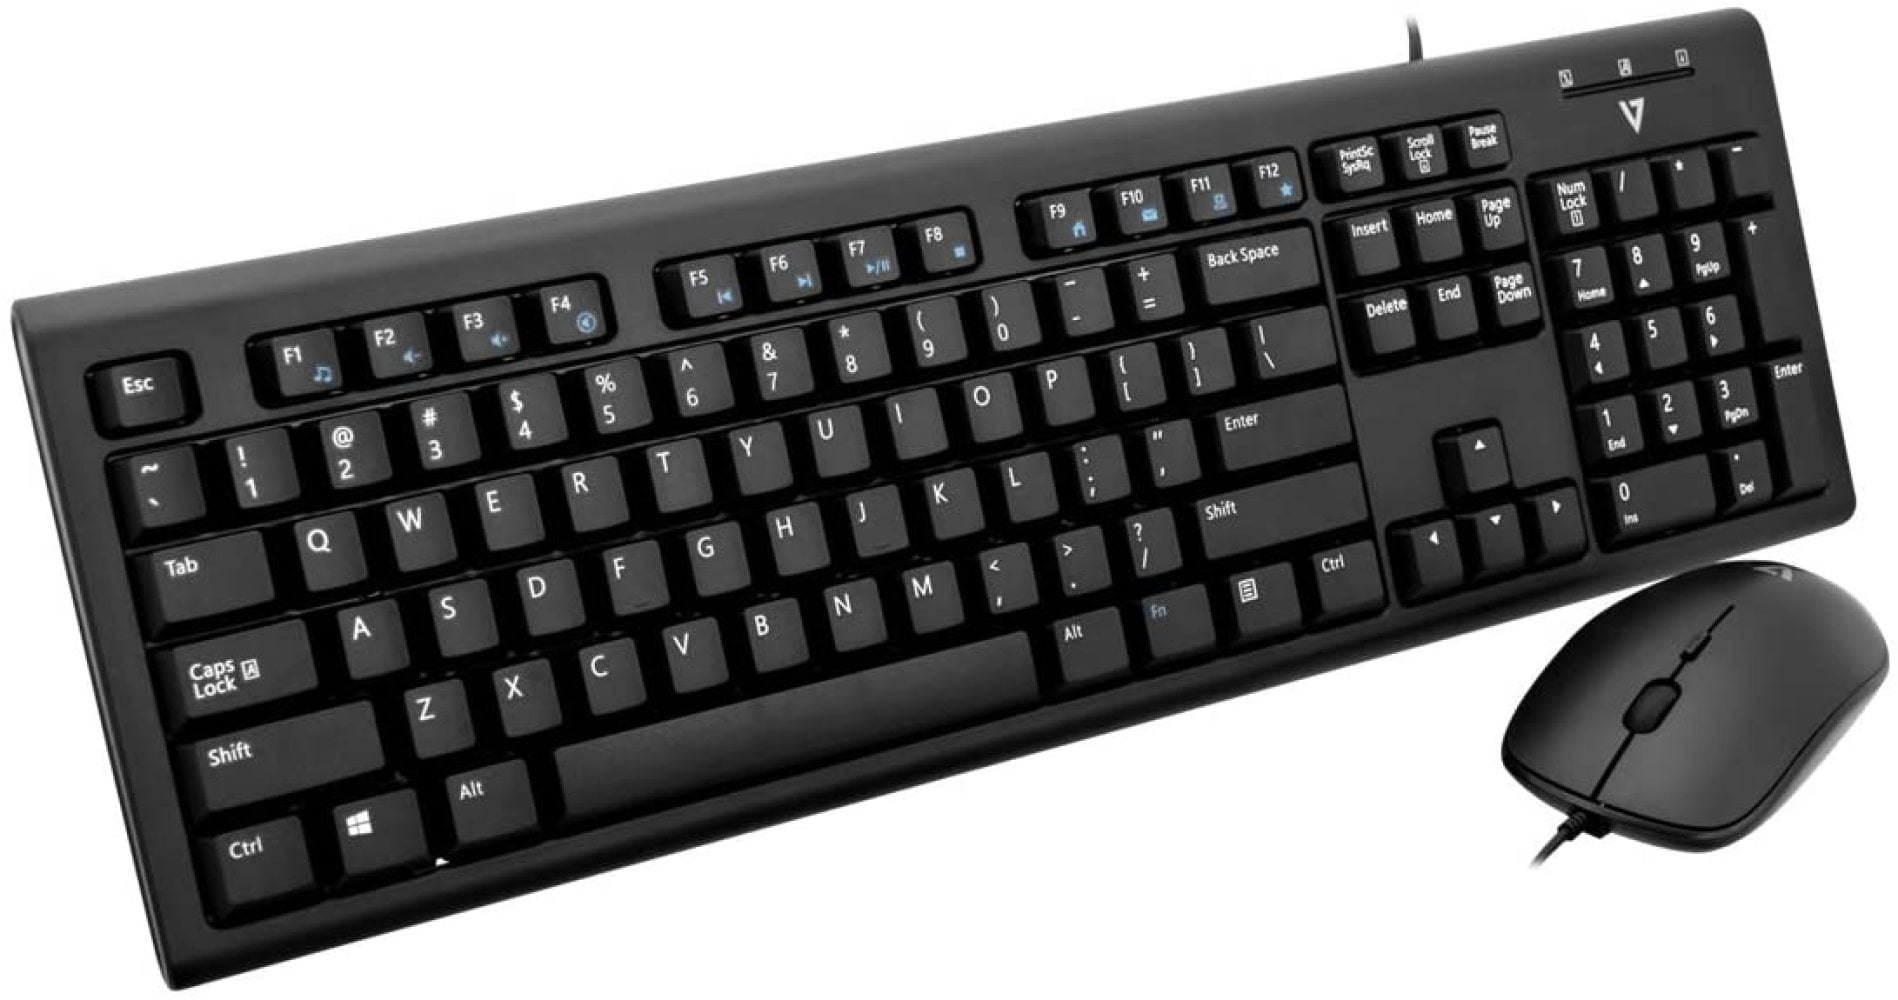 X168-B PS2 Gaming Keyboard & USB Mouse Wired Black Clean Sleek Design Blue Keys 